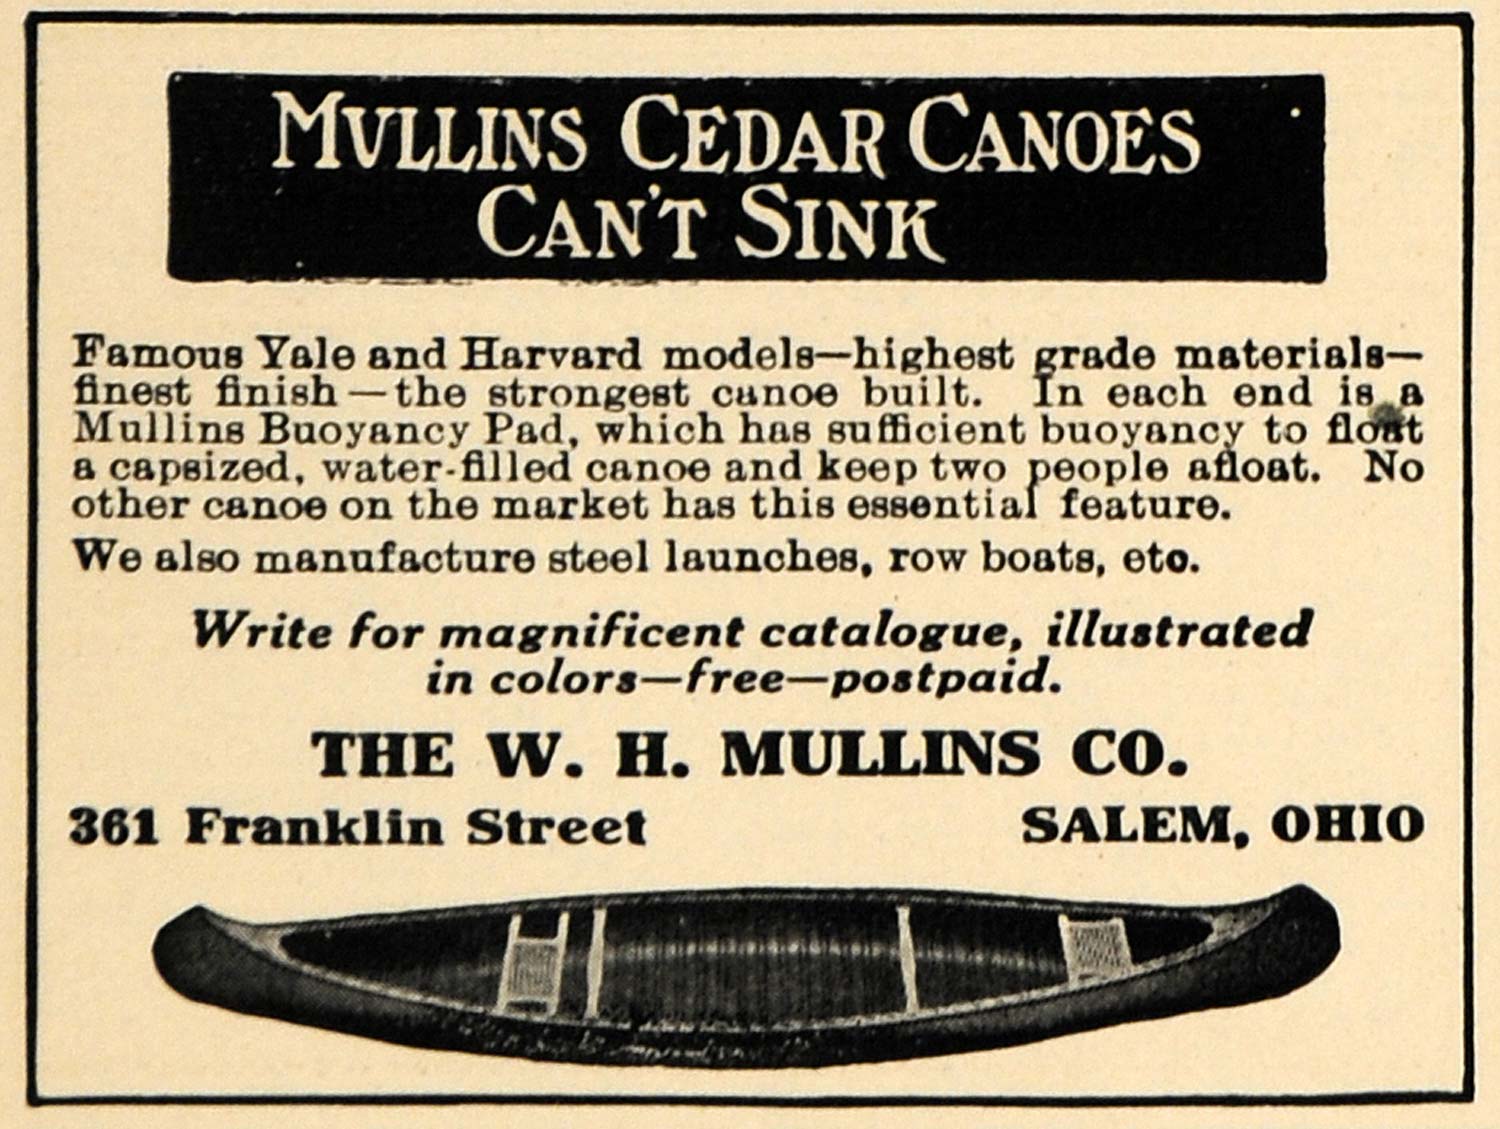 1912 Ad W. H. Mullins Harvard Yale Cedar Canoe Models - ORIGINAL ADVERTISING TW1